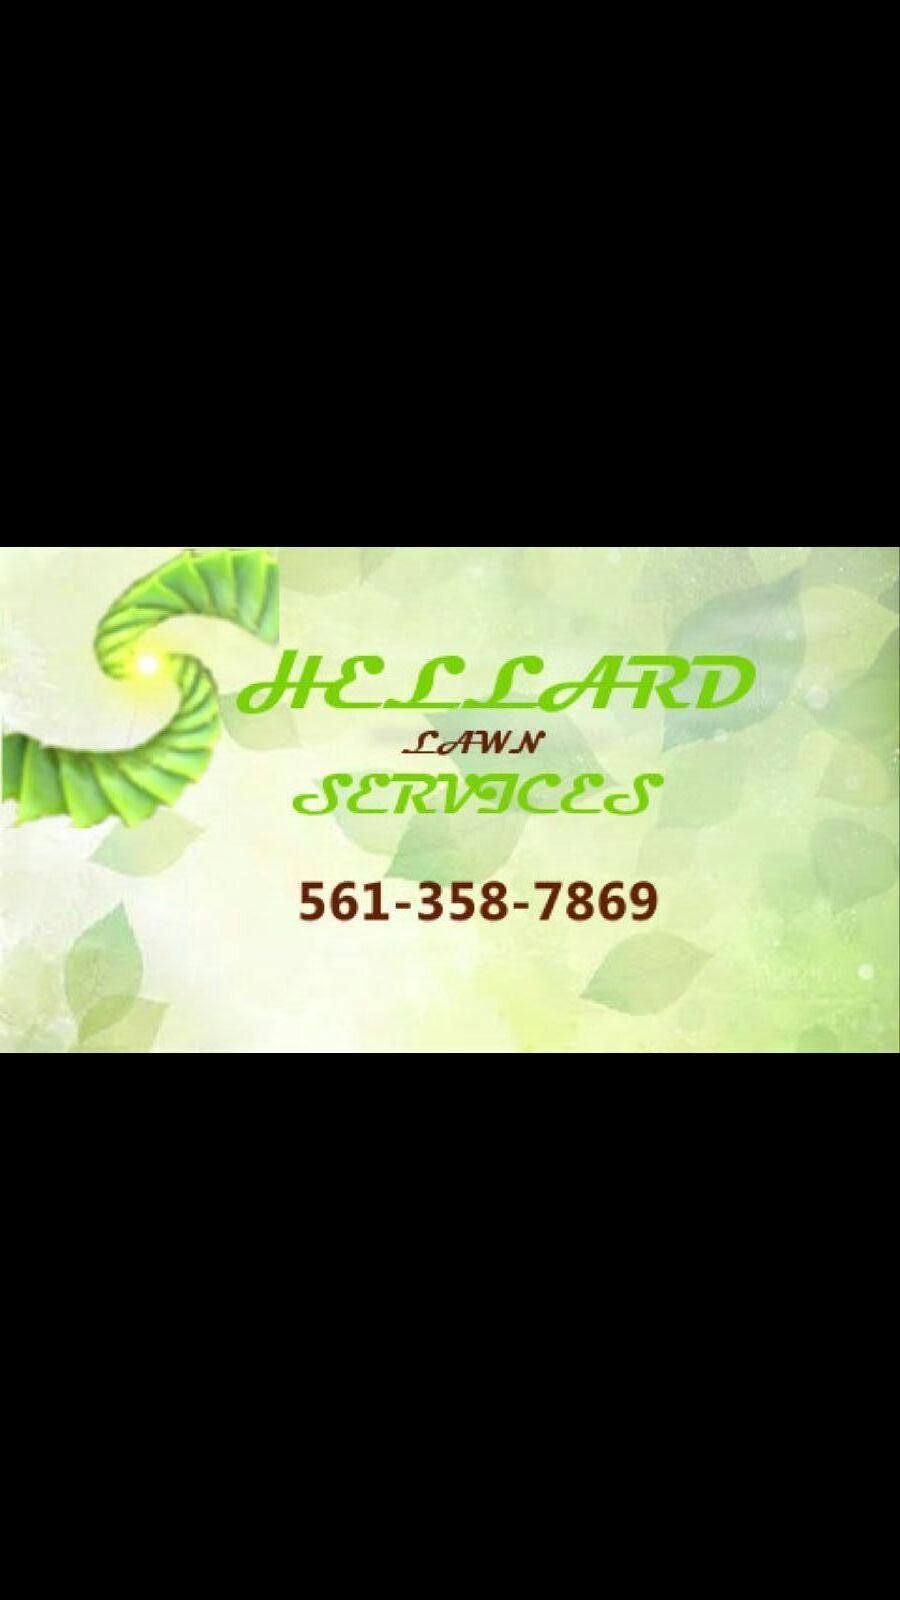 Shellard Landscaping LLC